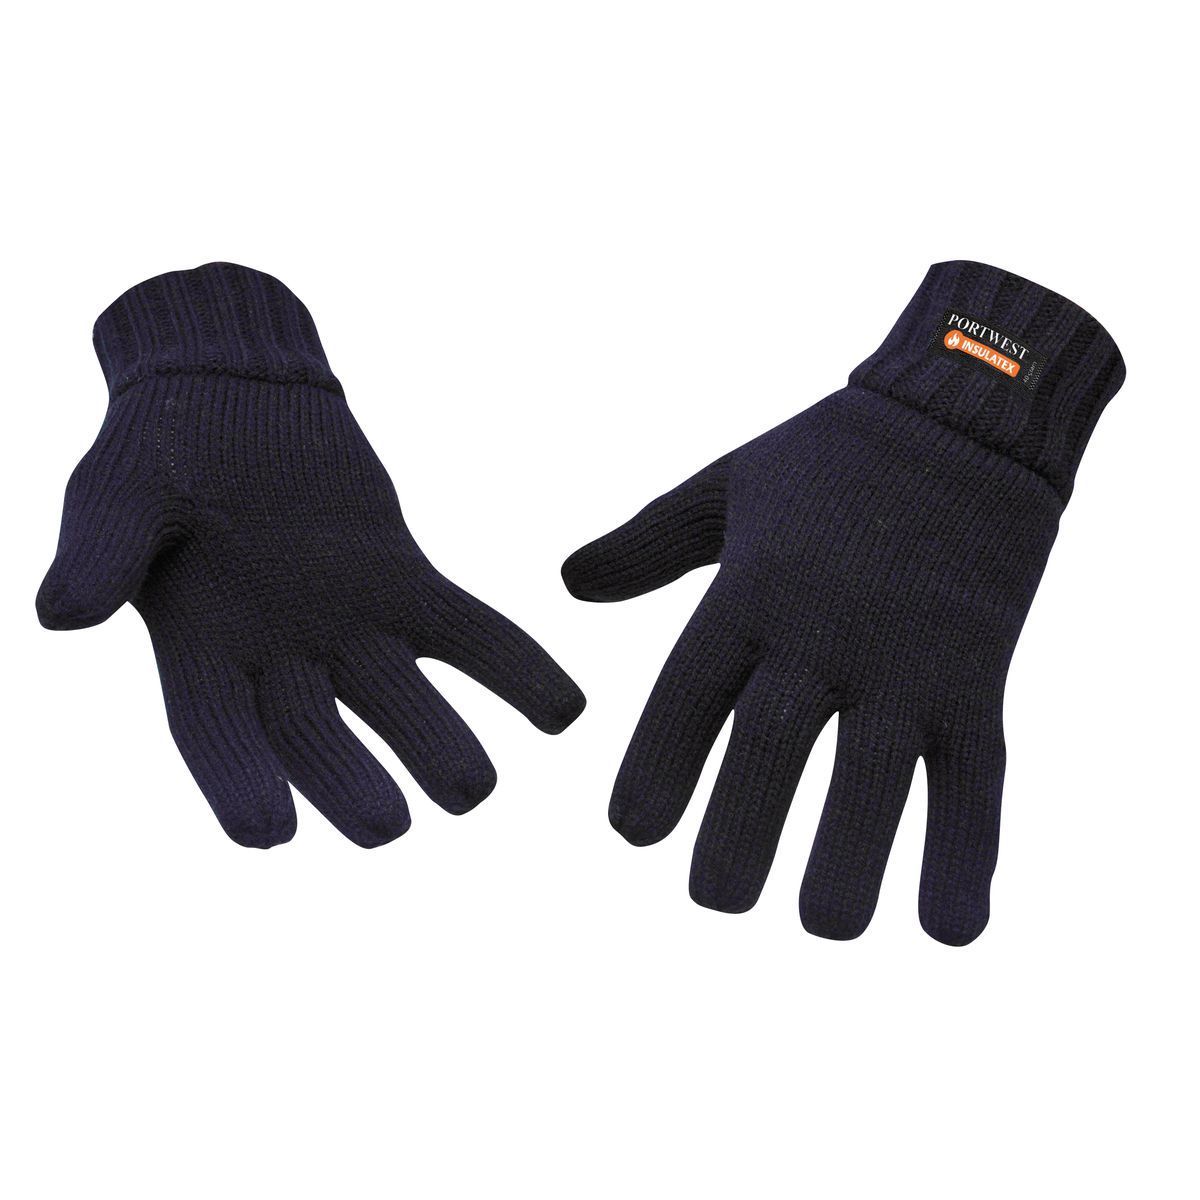 Style GL13 Insulatex Knit Glove-2